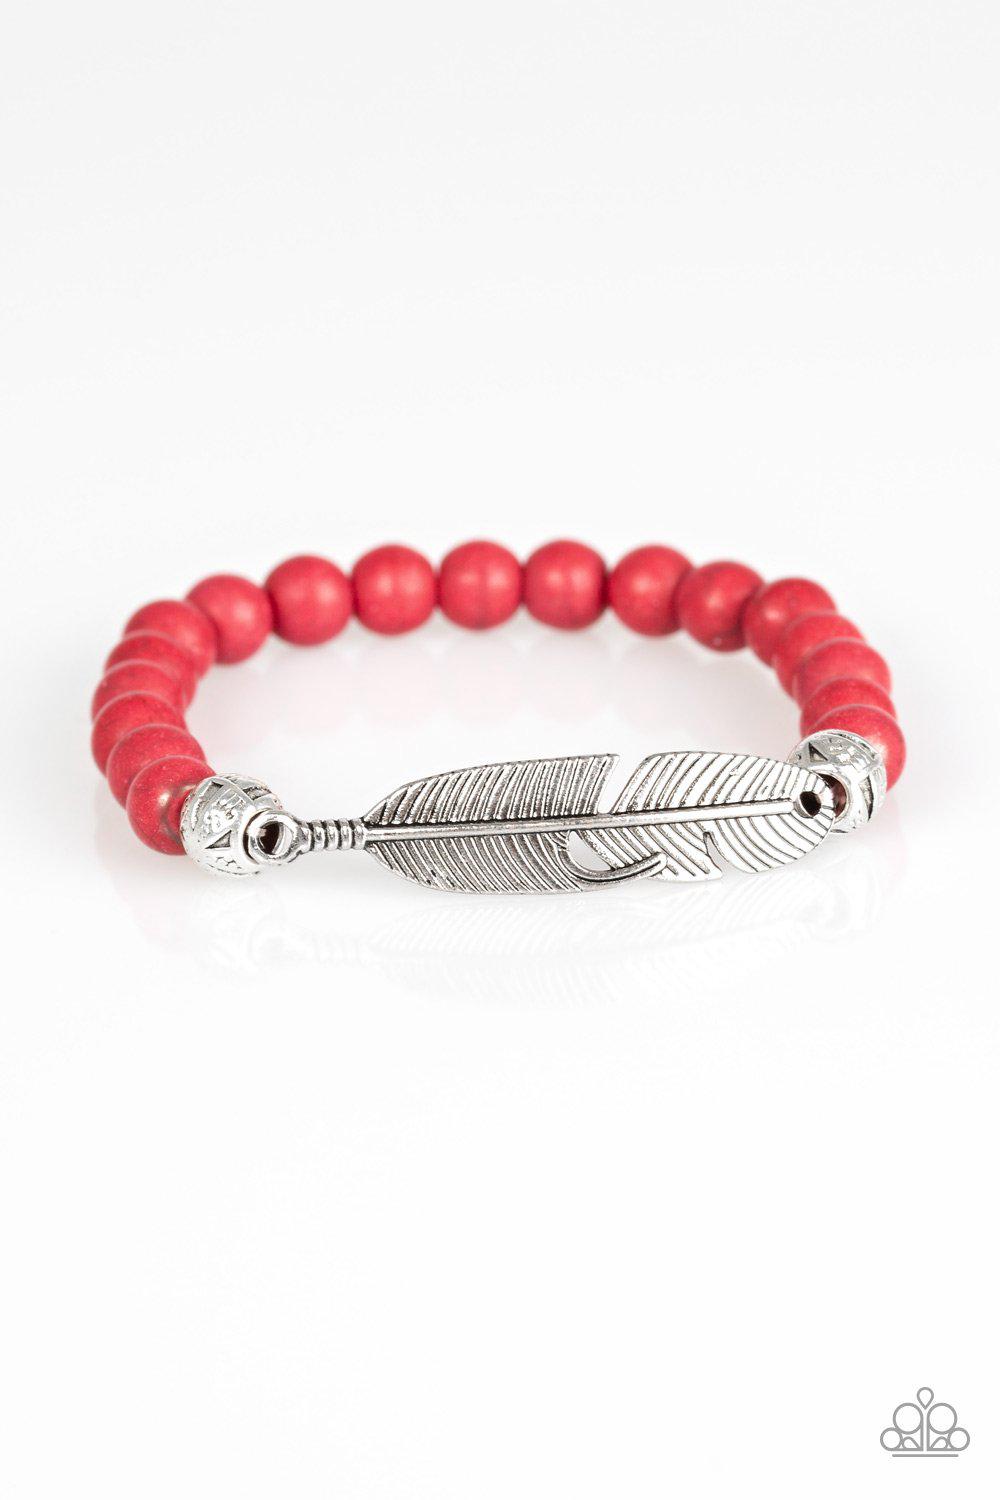 Take Wing Red Stone Stretch Bracelet - Paparazzi Accessories-CarasShop.com - $5 Jewelry by Cara Jewels